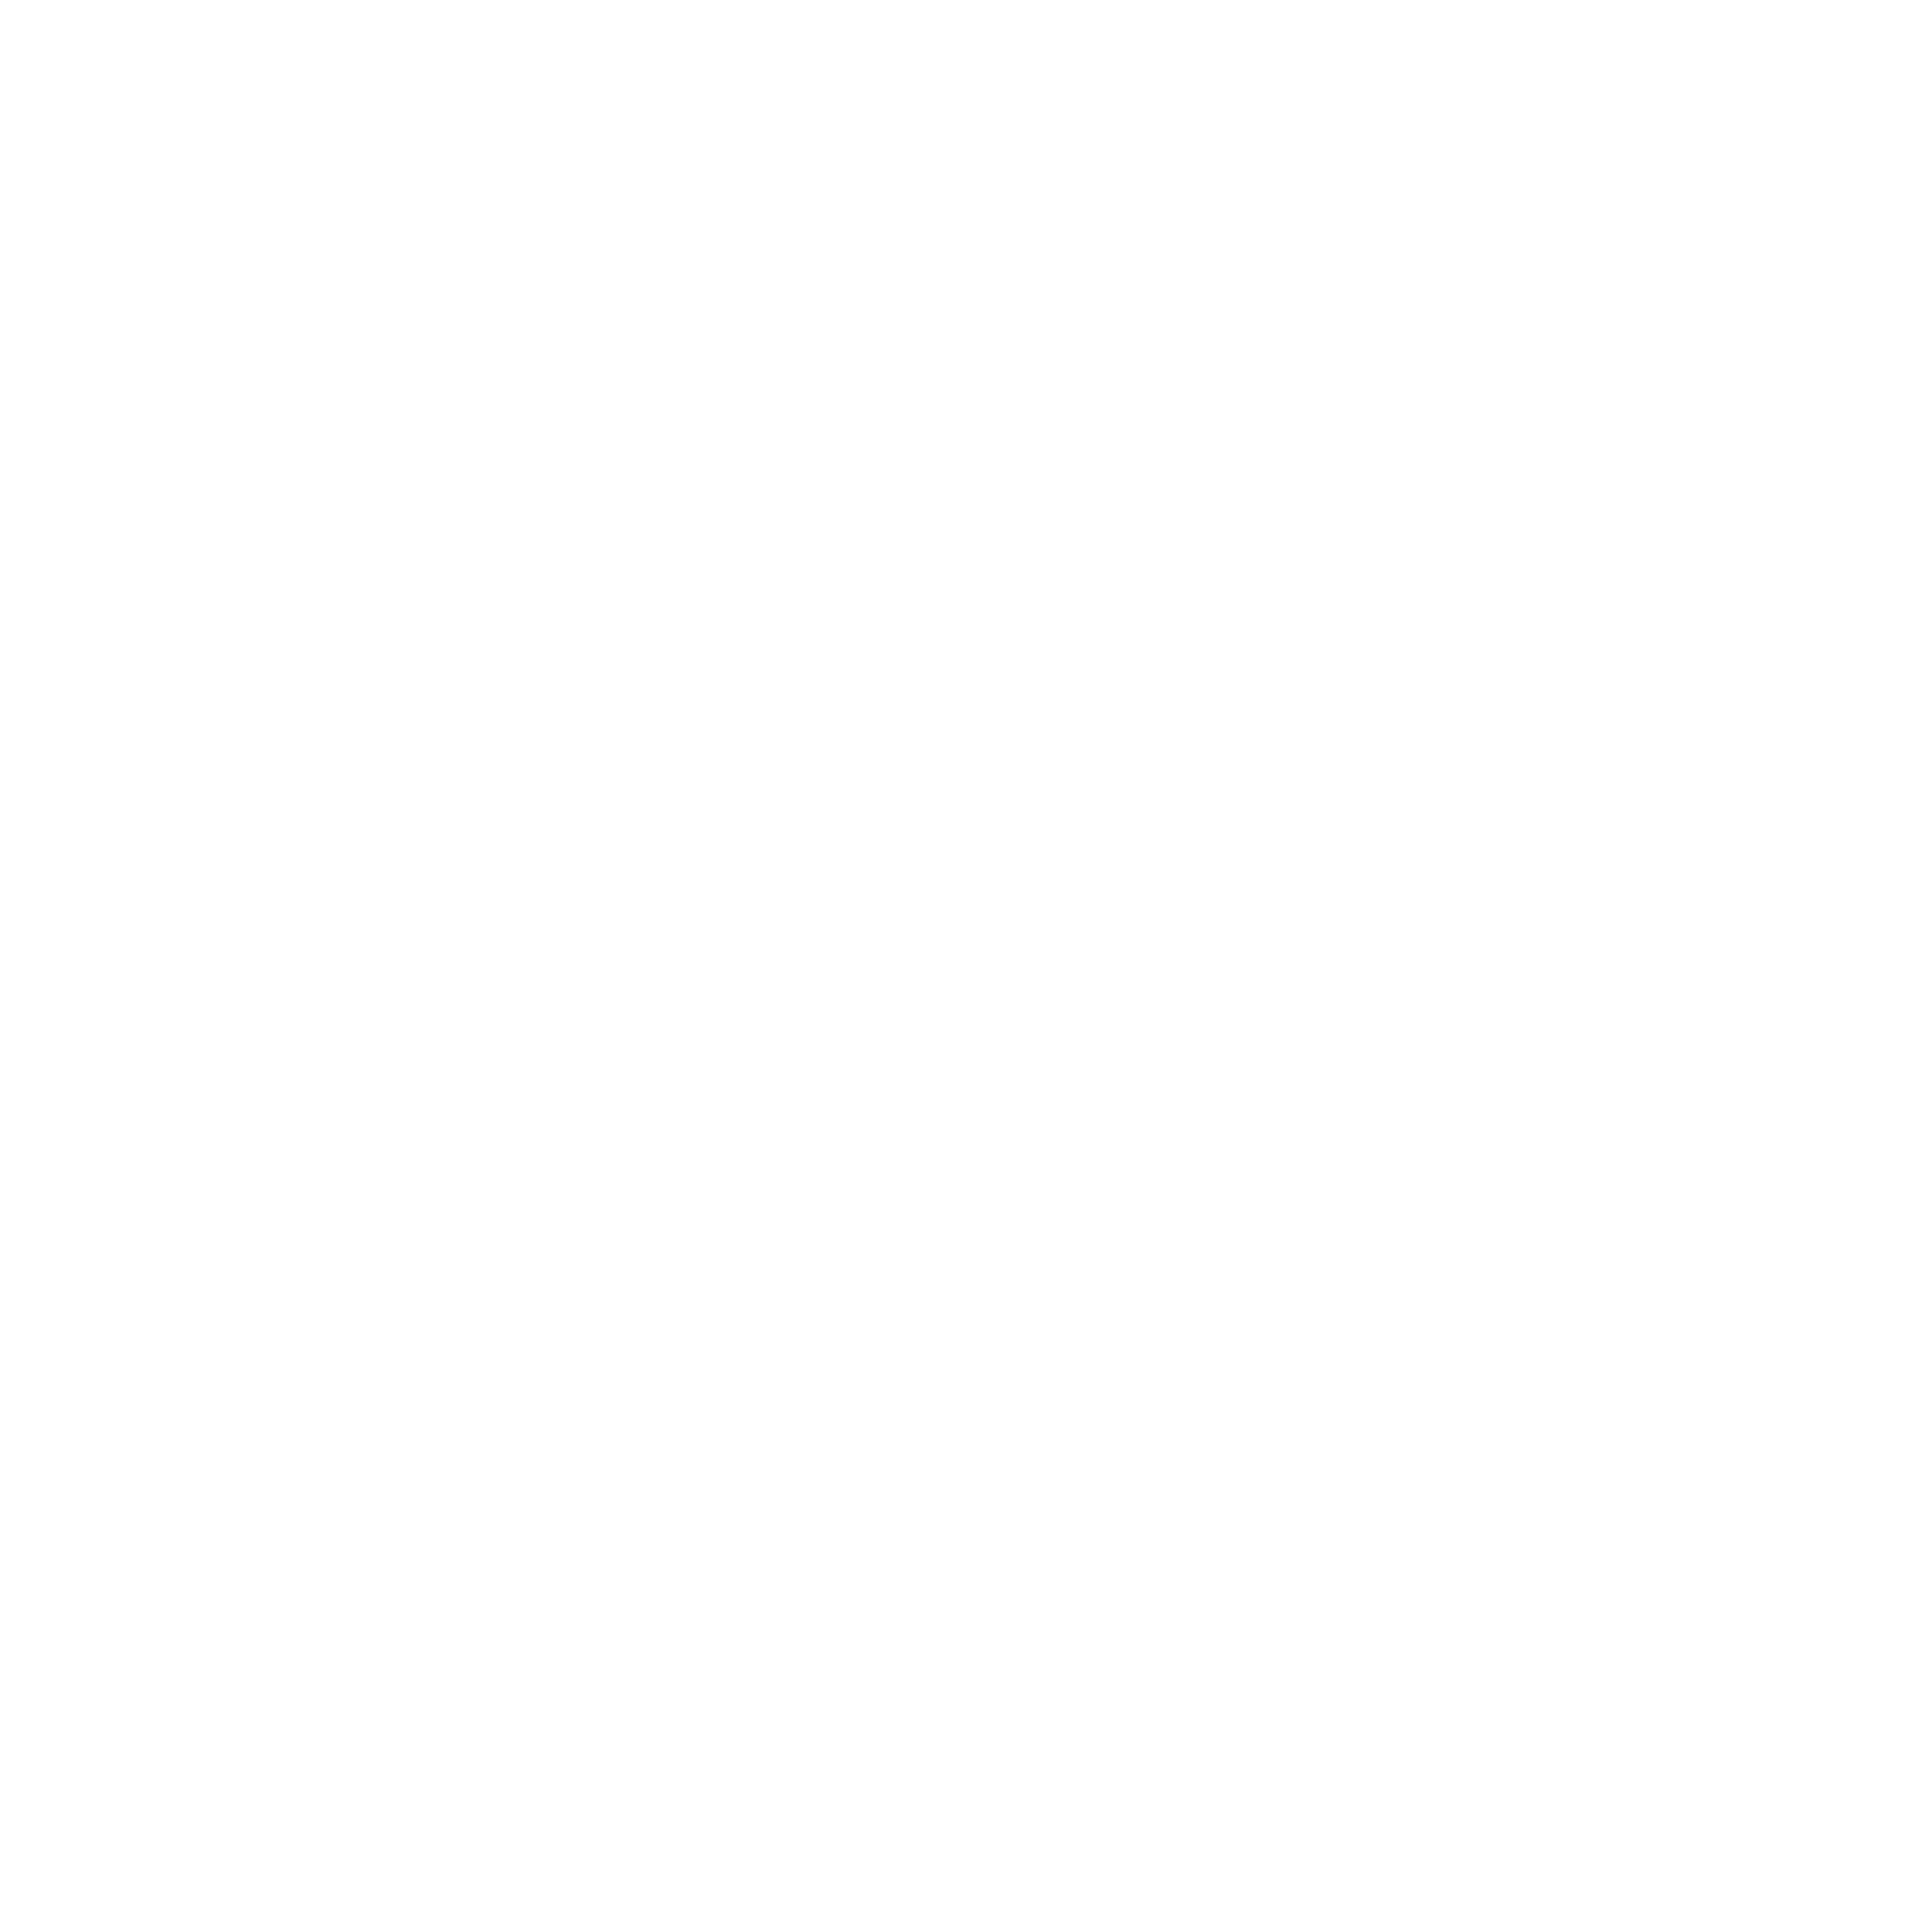 AVAA Auctioneers and Valuers Association Australia